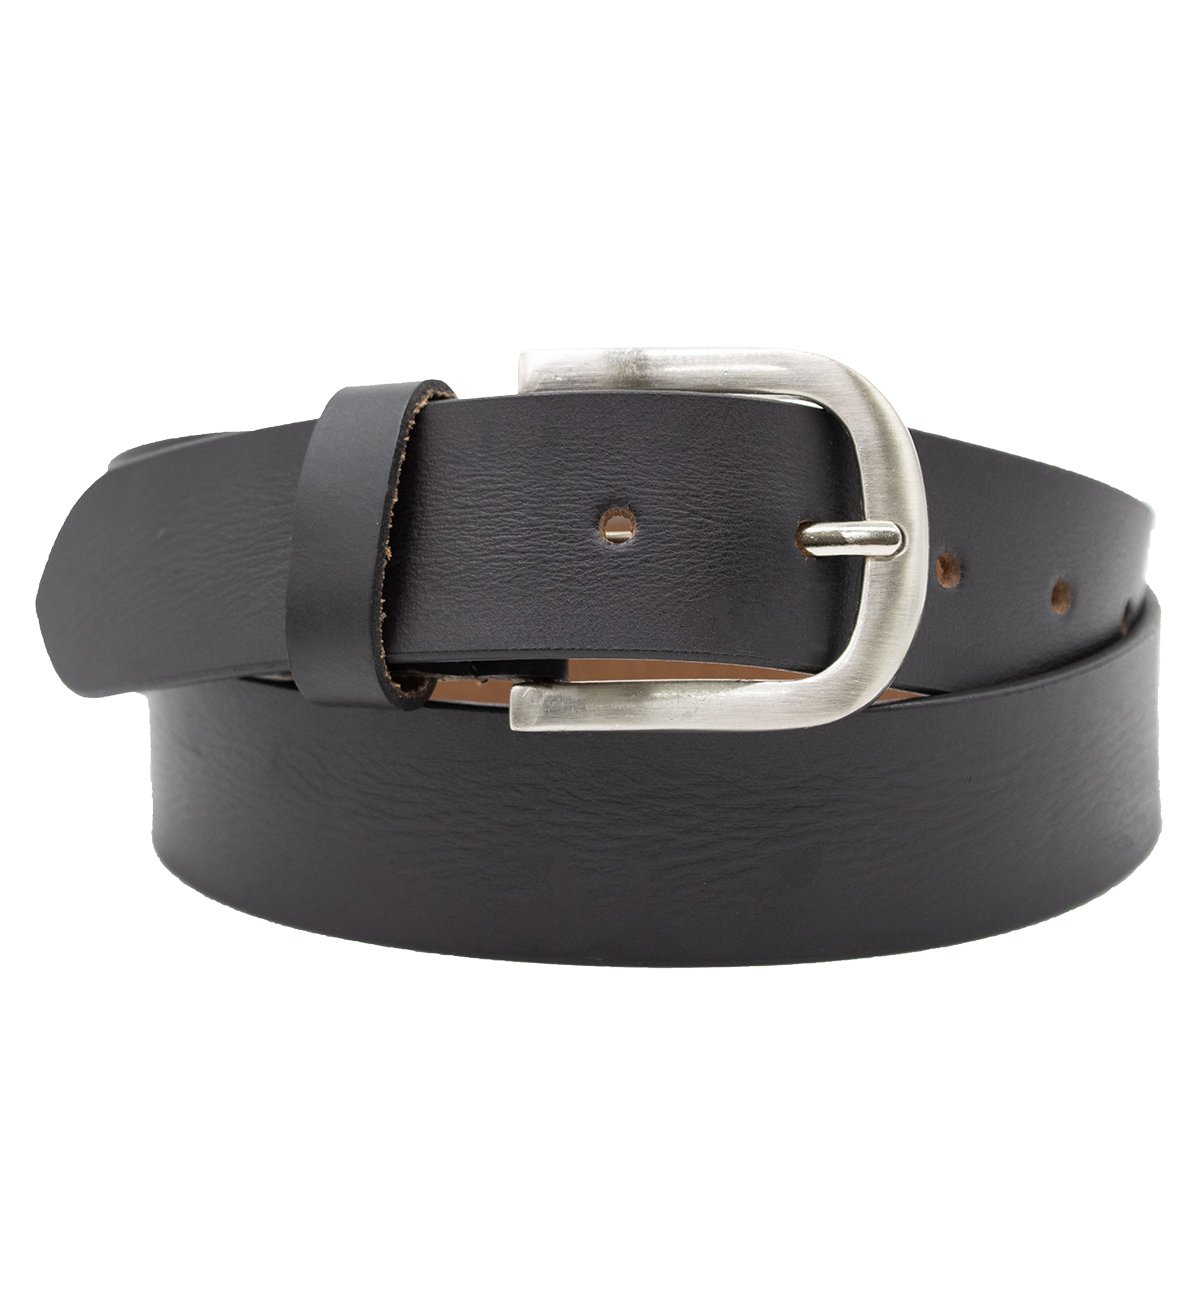 MACHO - Men's Genuine Leather Belt with Heavy Silver Buckle - #BT-803